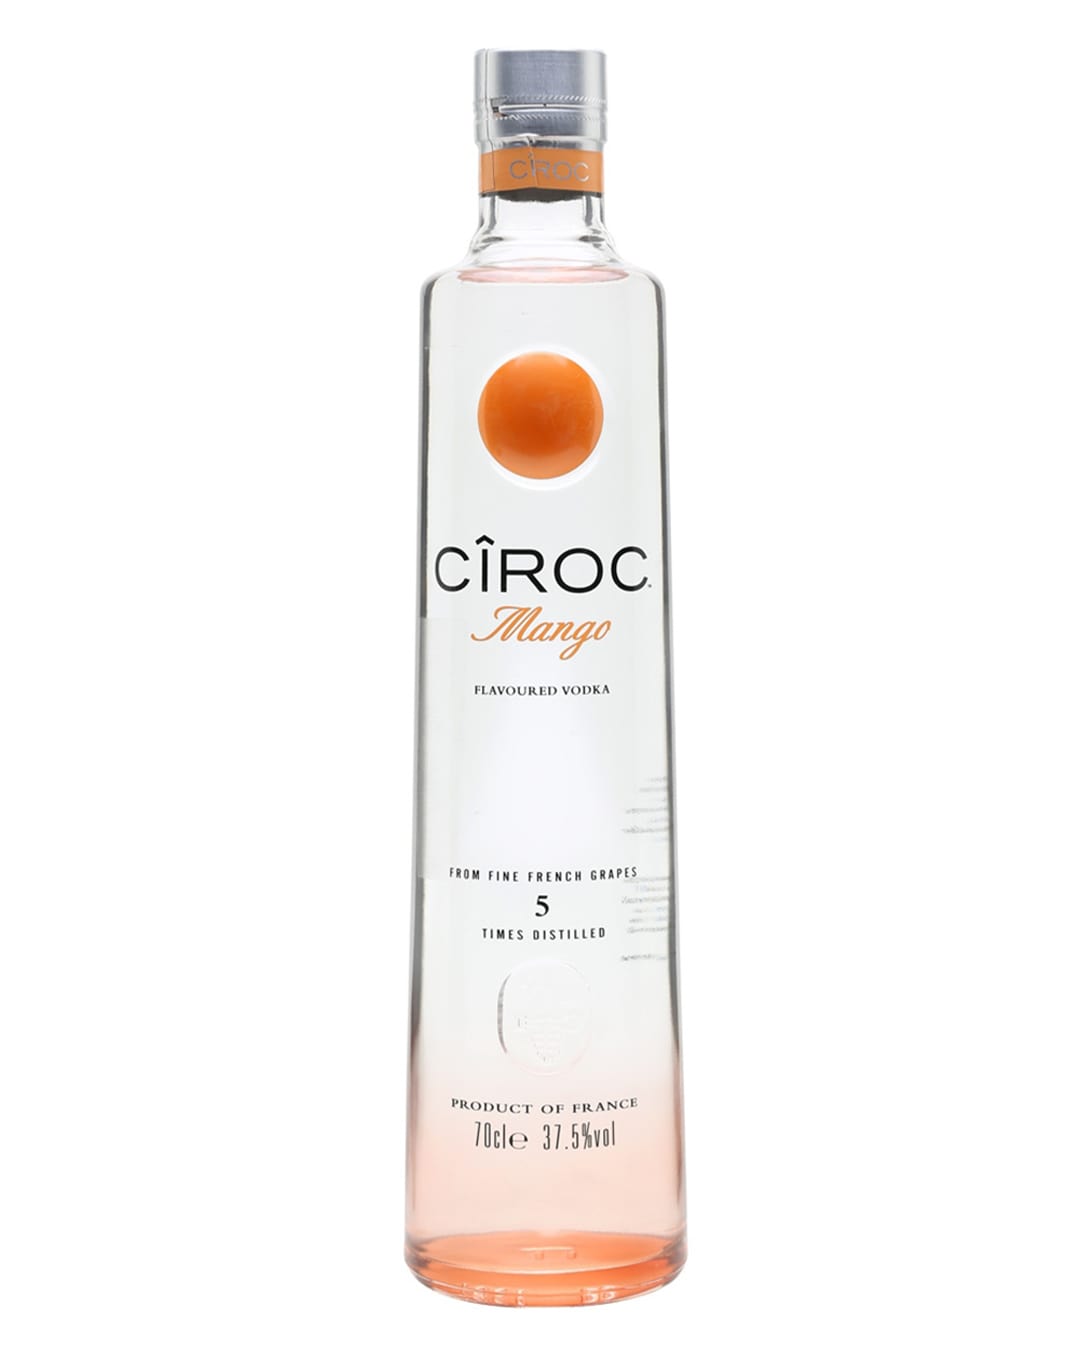 Buy Ciroc Mango Vodka online at The Bottle Club